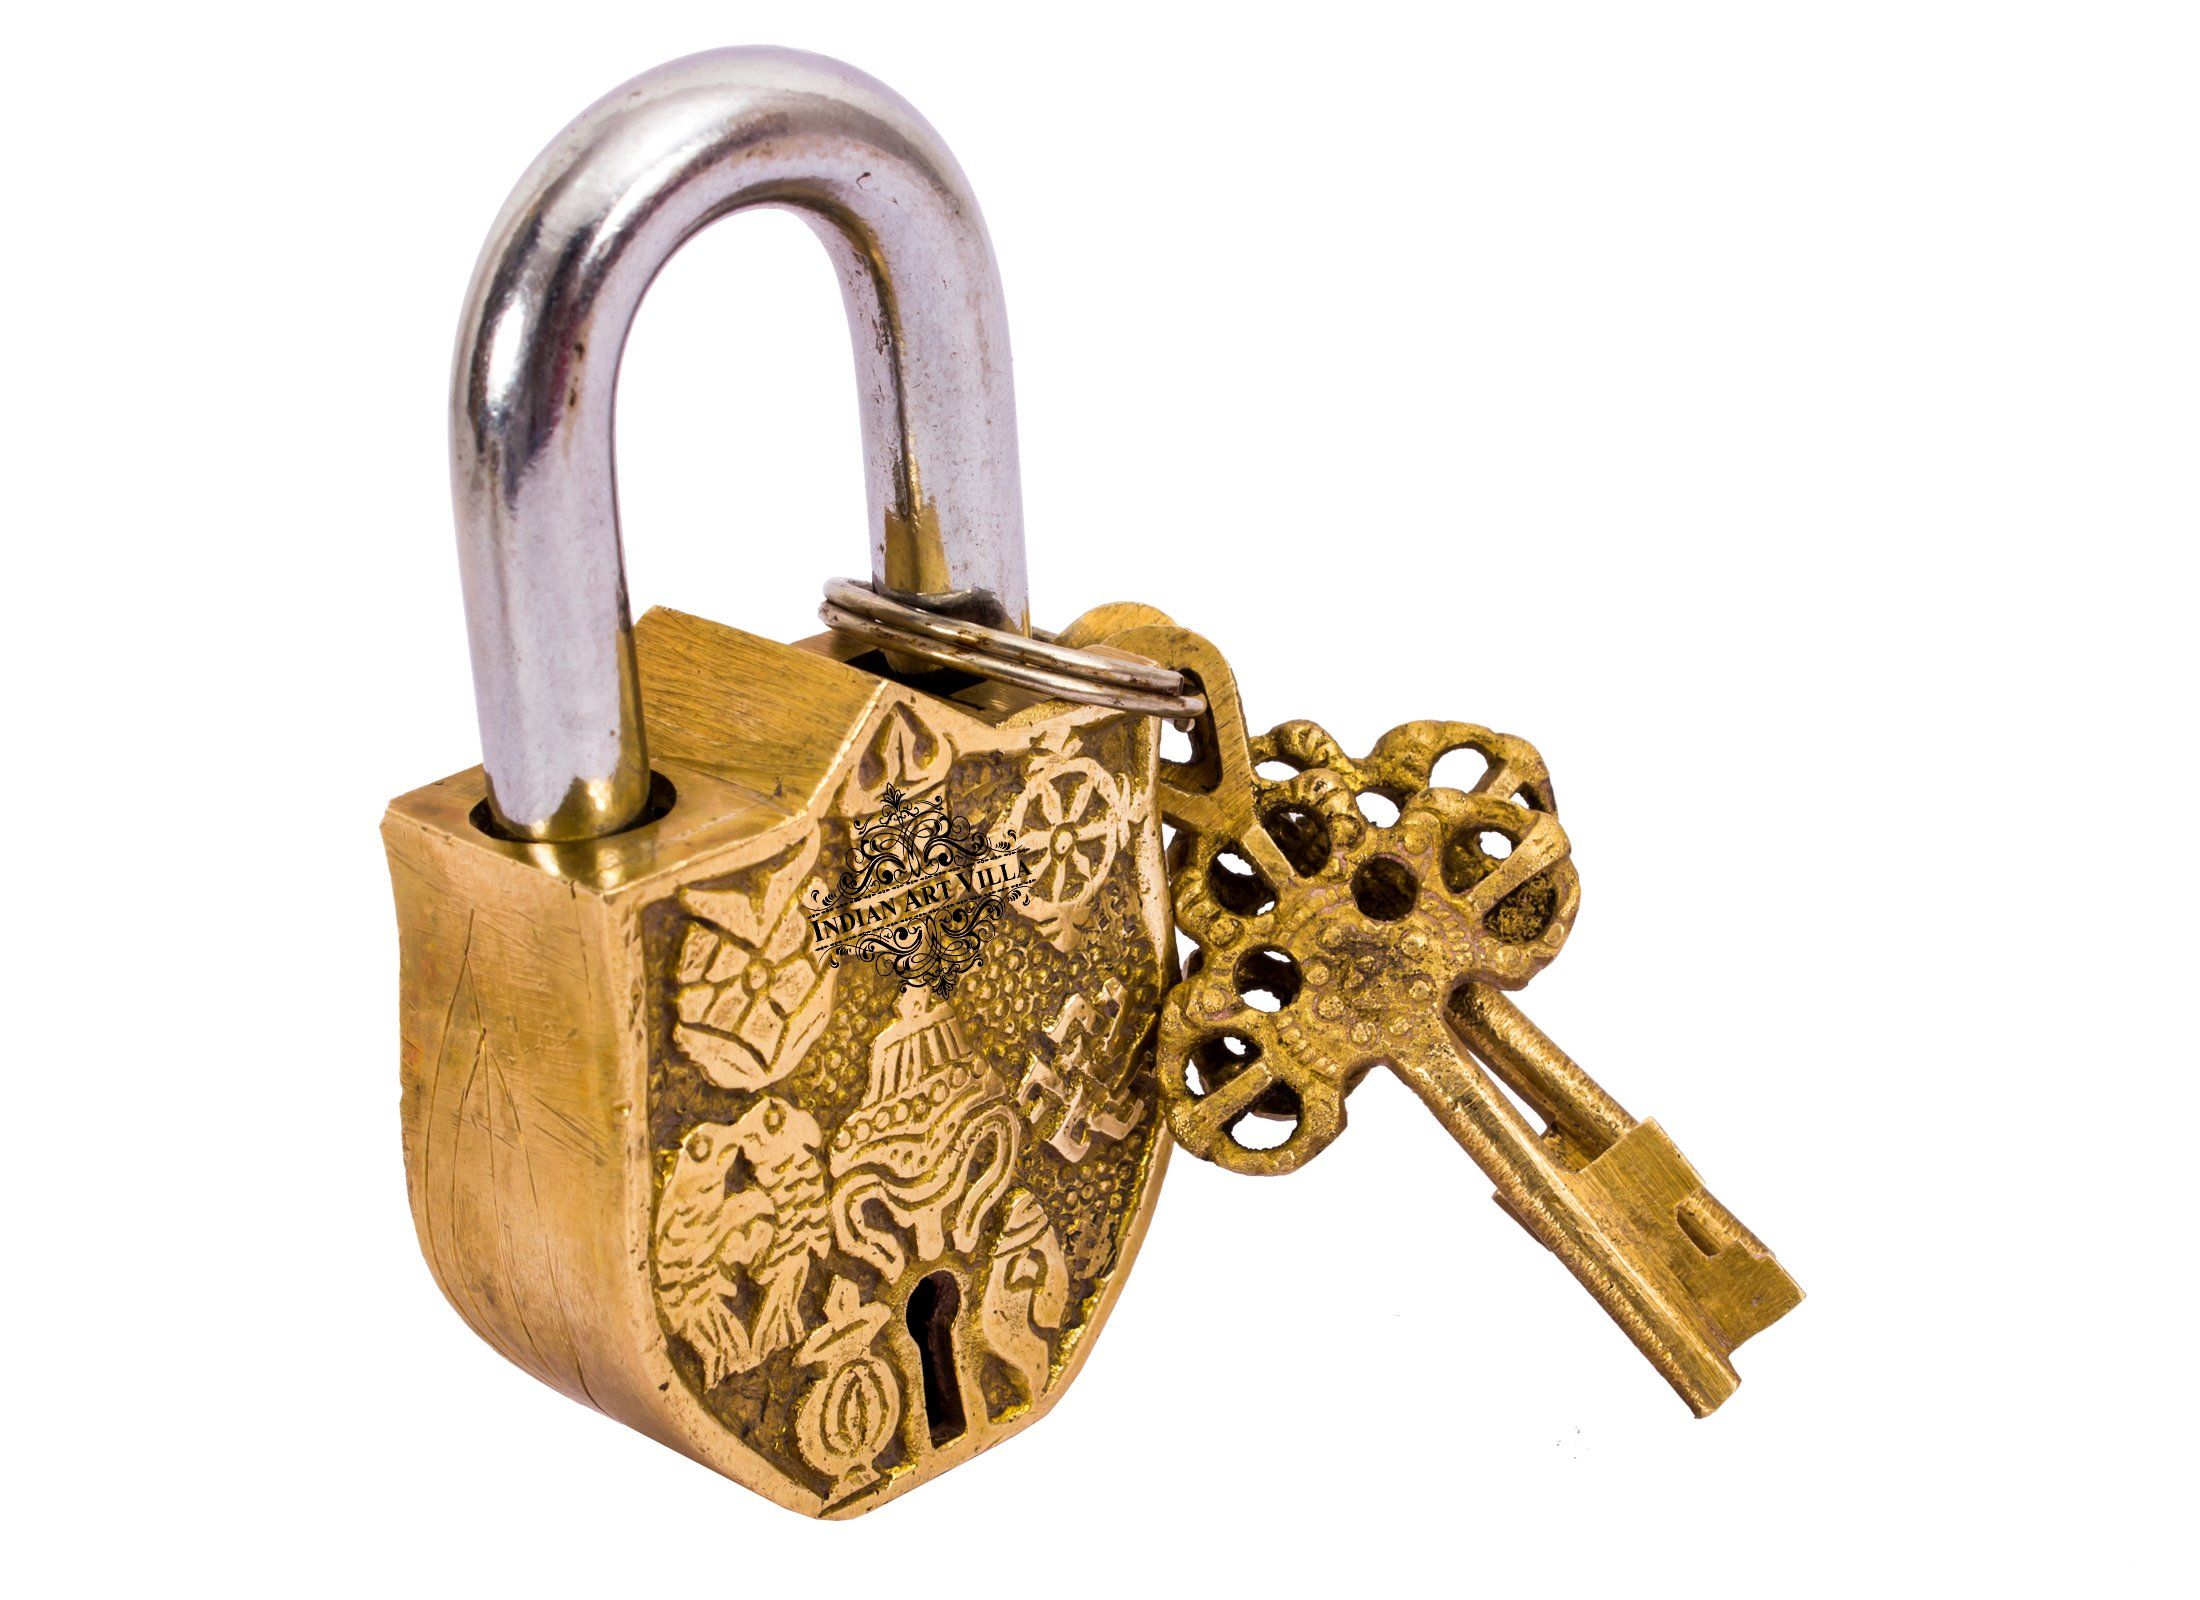 INDIAN ART VILLA Brass Vastu Fengshui Design Lock with 2 Keys